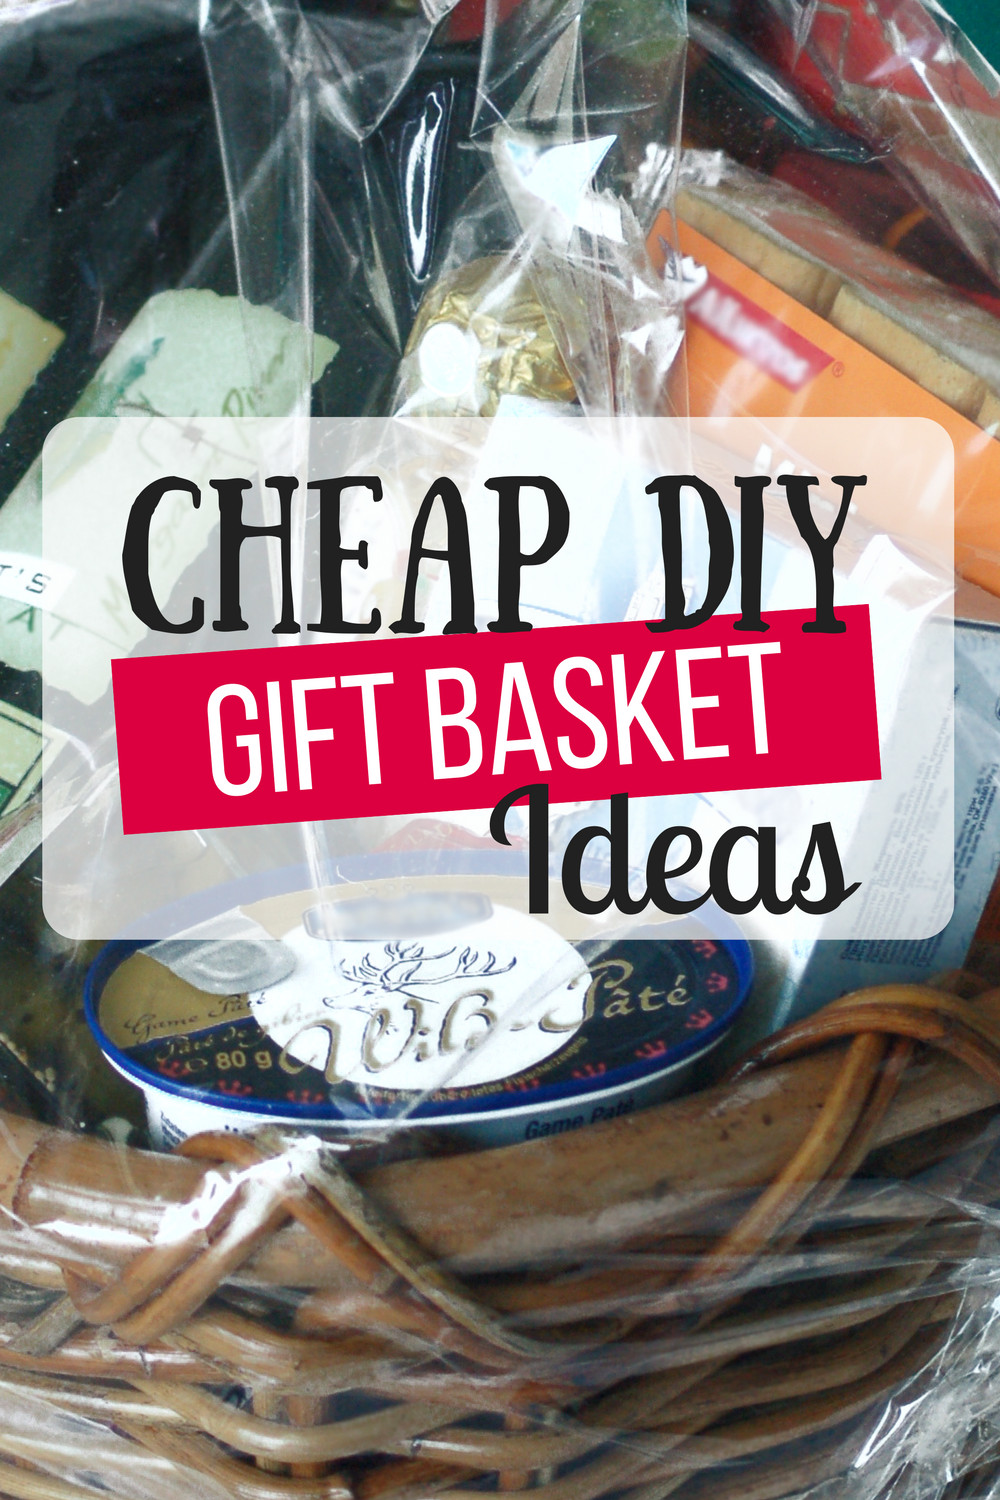 Gift Basket Ideas Diy
 Cheap DIY Gift Baskets The Busy Bud er